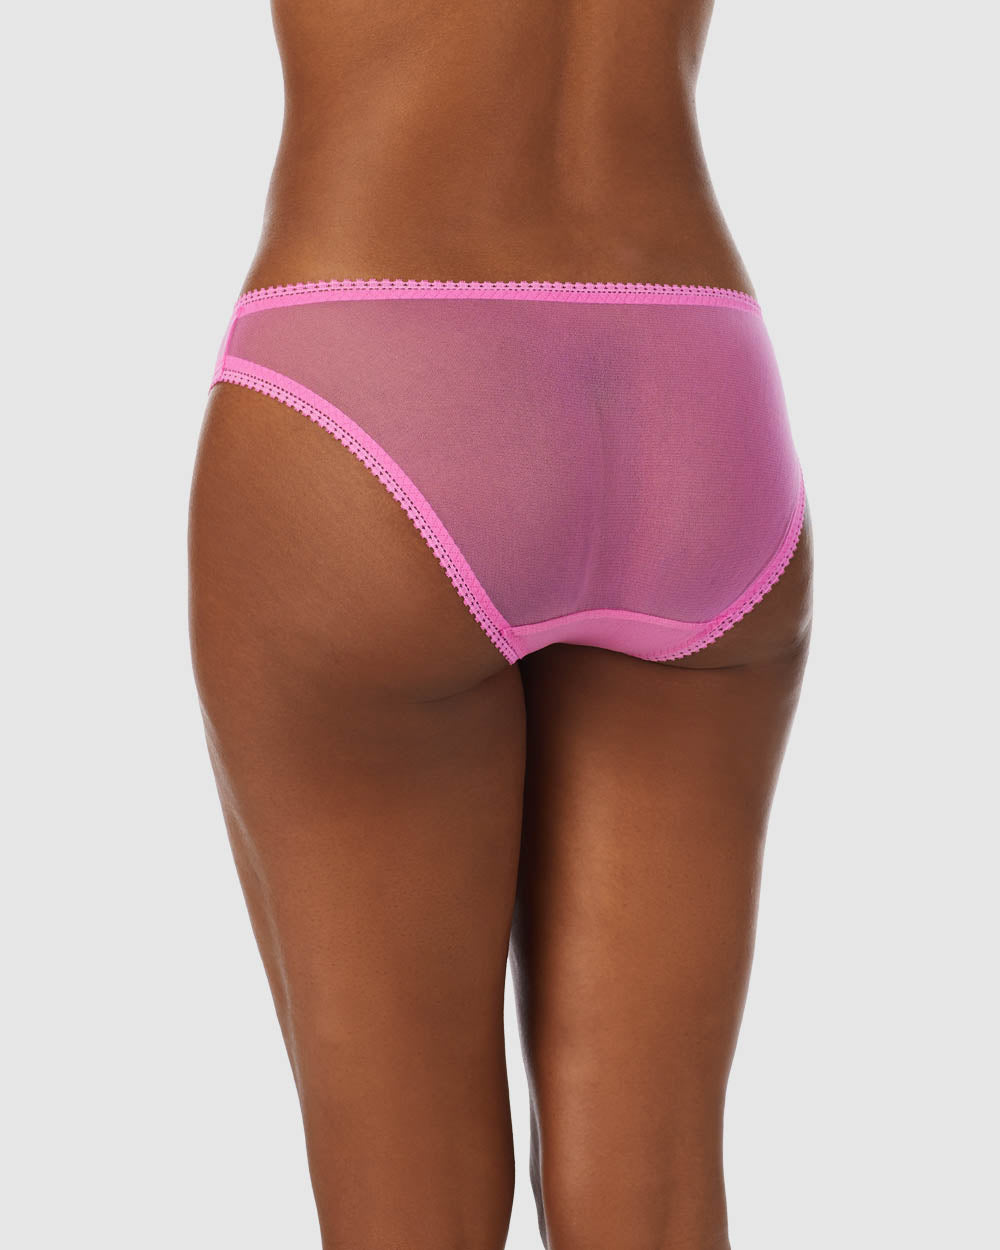  A lady wearing Bright Pink Gossamer Mesh Hip Bikini Underwear